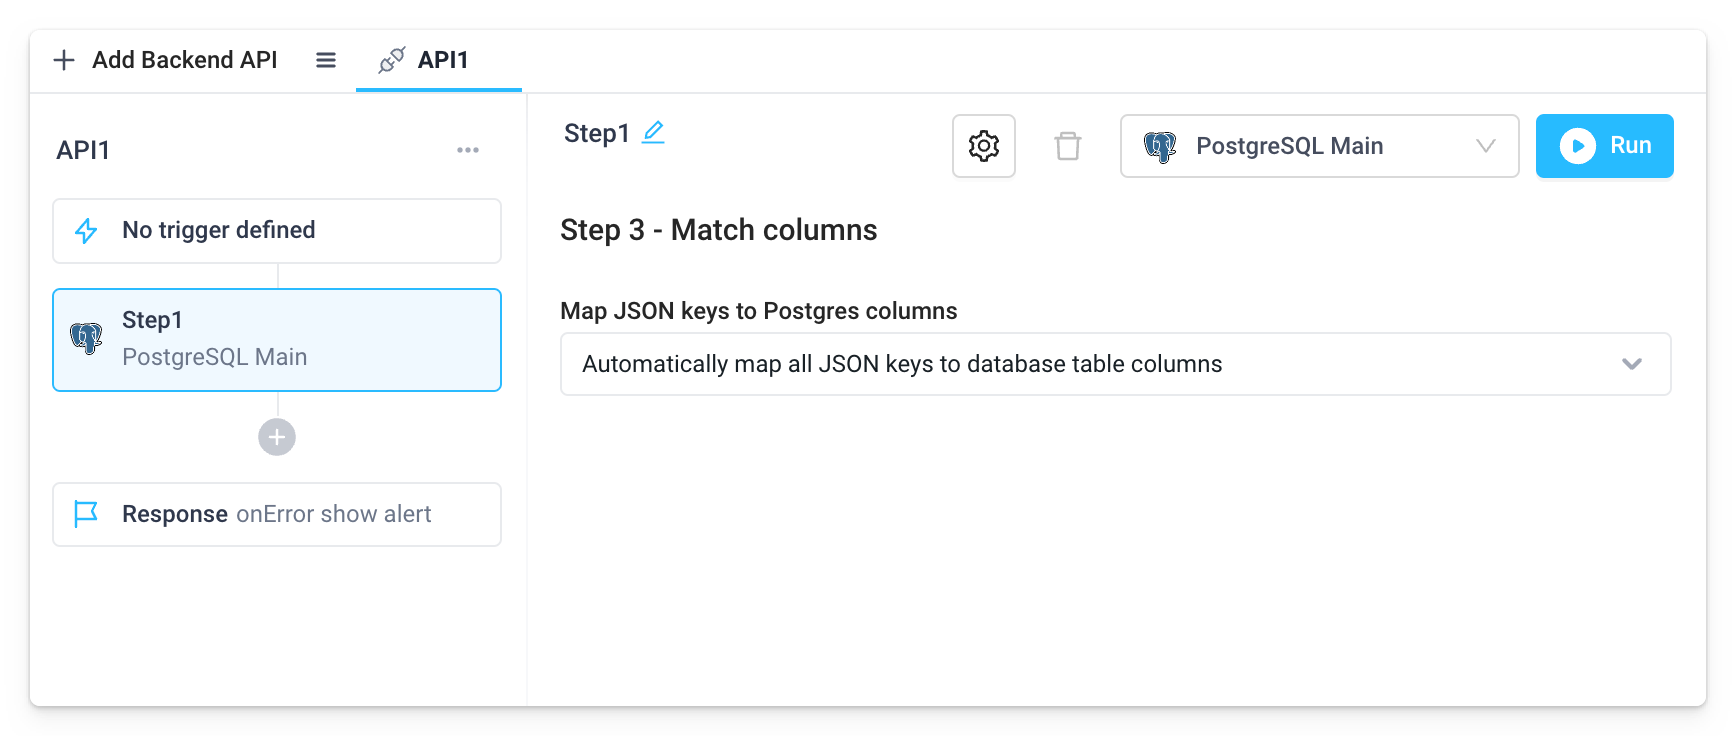 Define the JSON key per SQL column to match columns